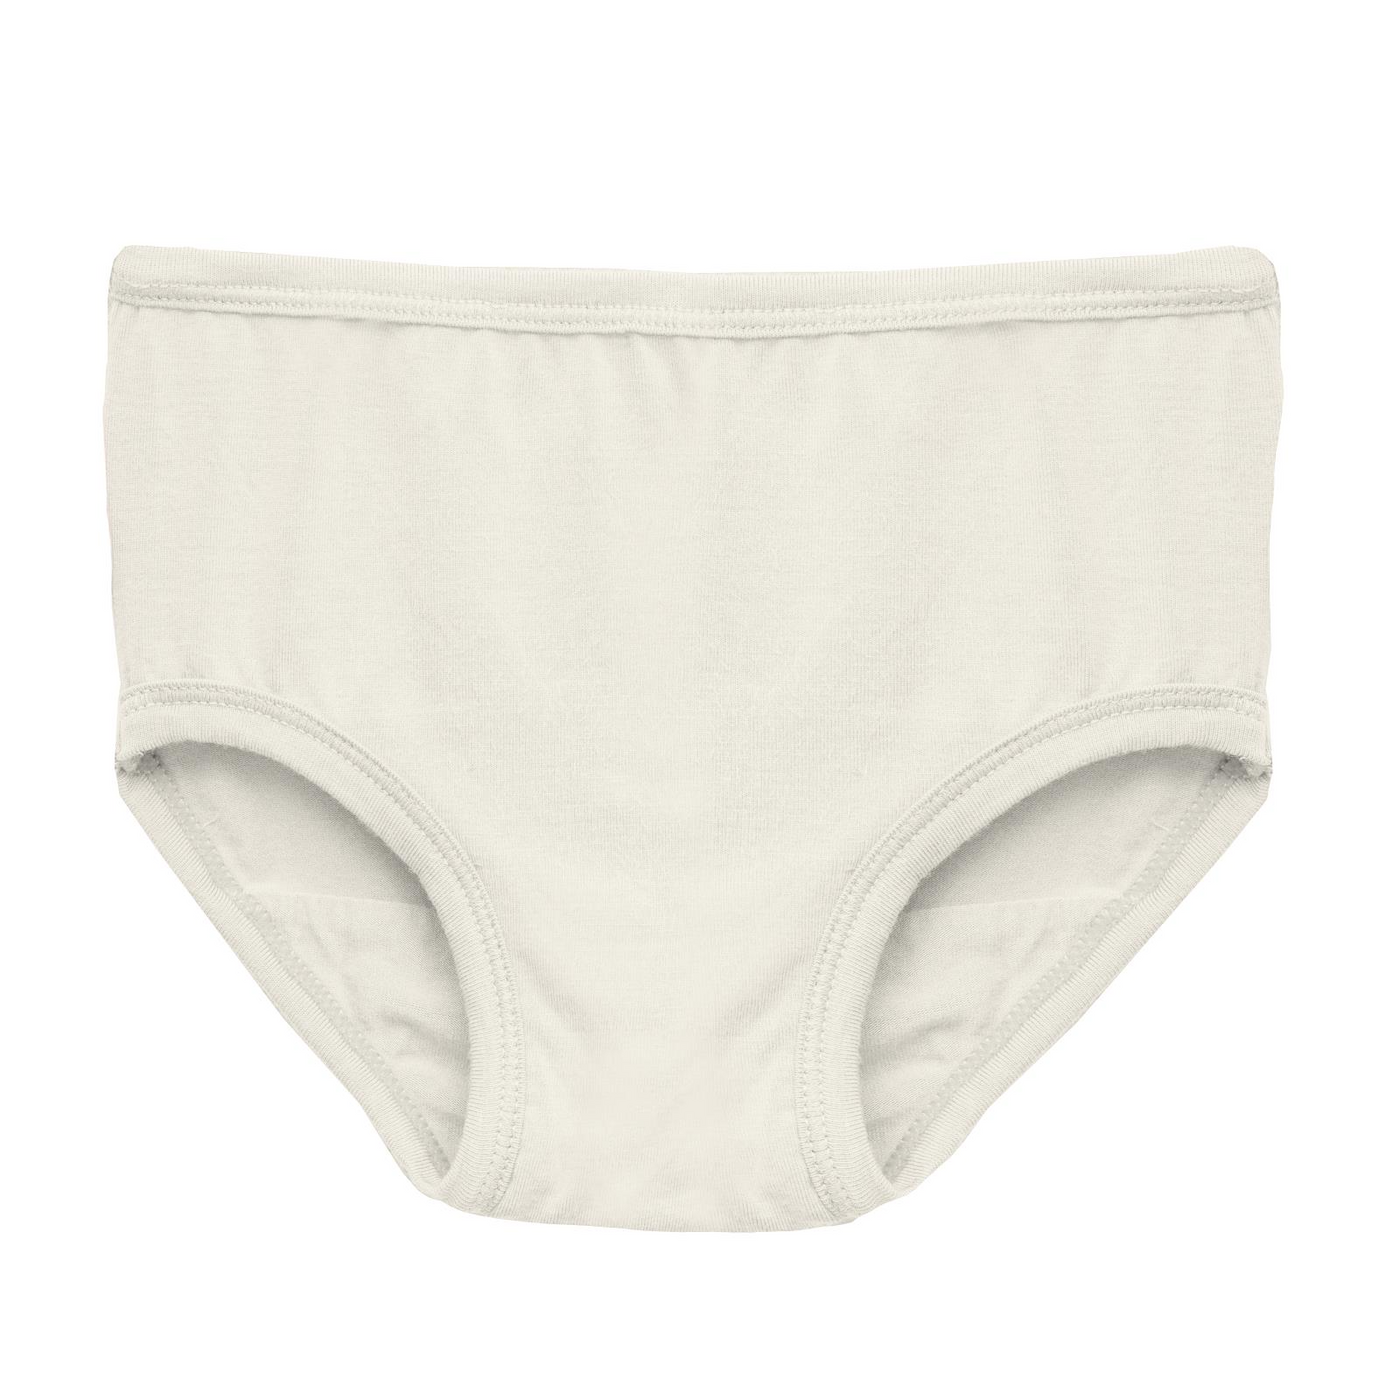 Kickee Pants Girl's Underwear Set of 3: Solid Natural